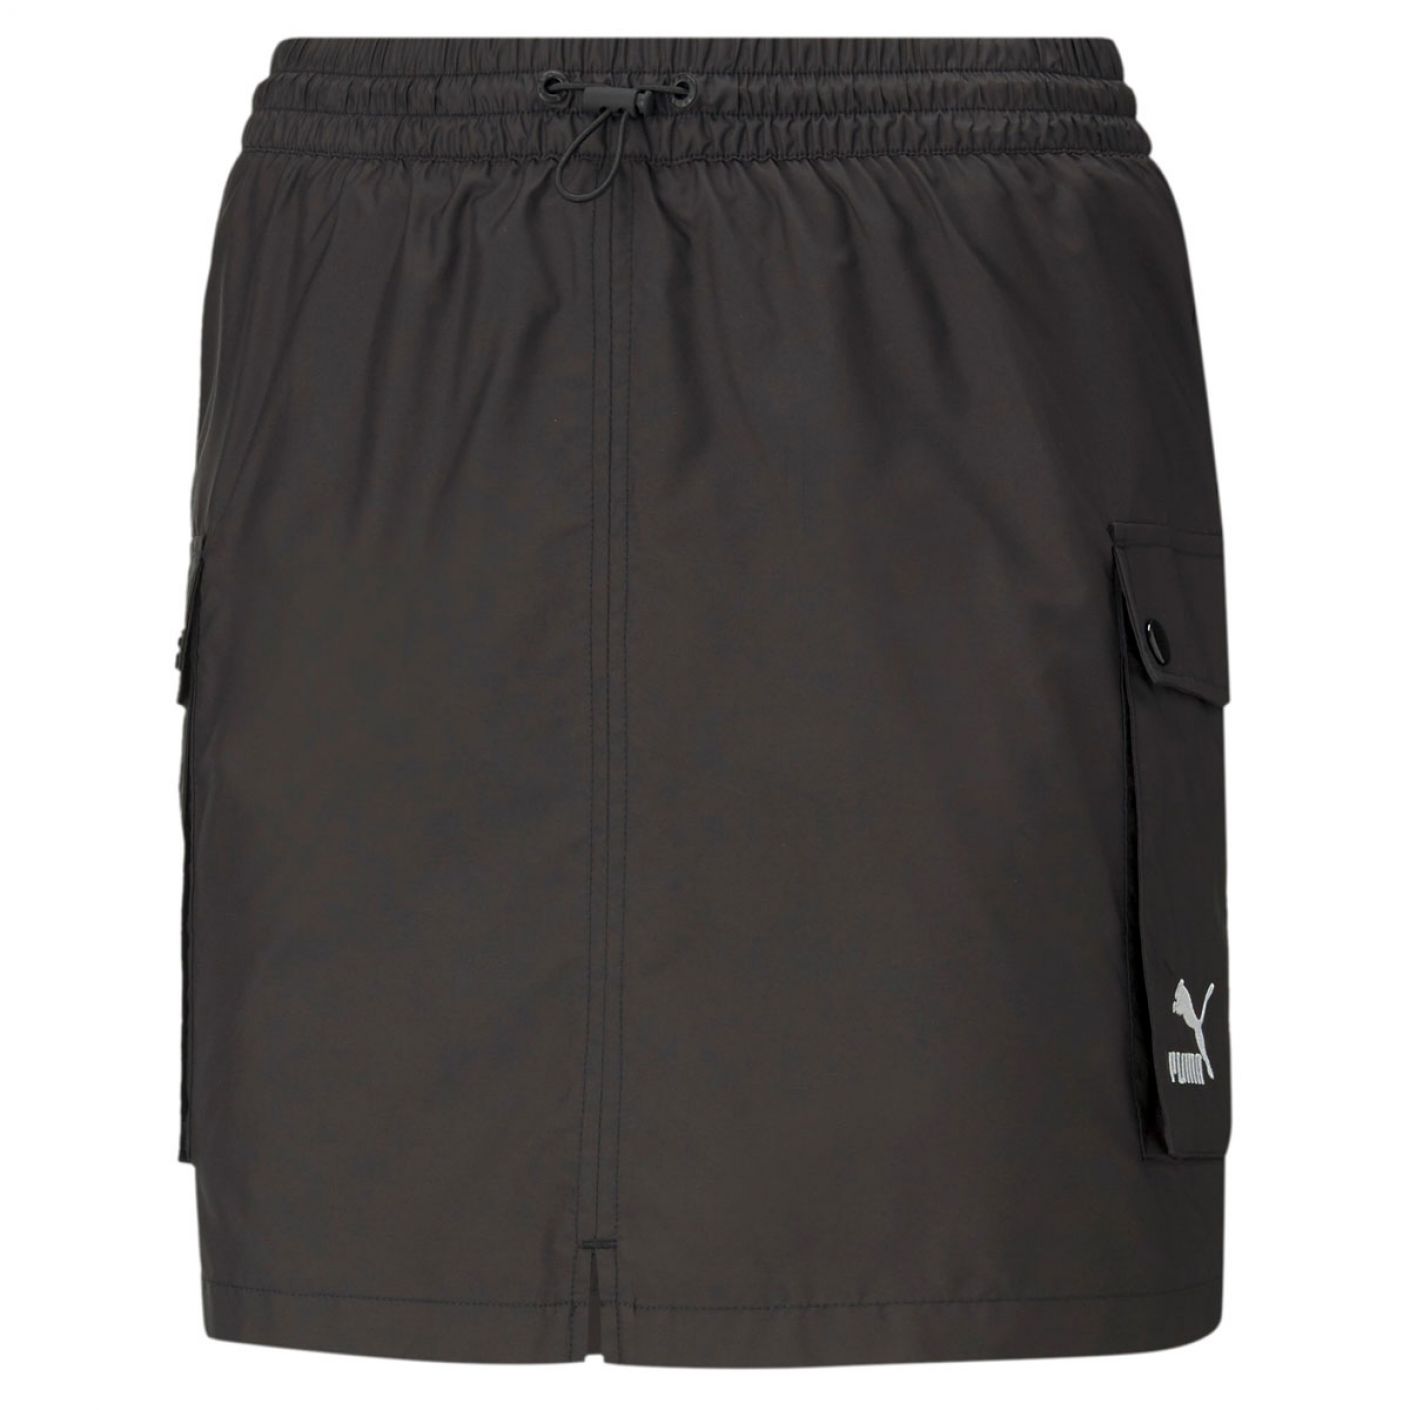 Puma Classic Cargo Skirt - Black Pockets Skirt